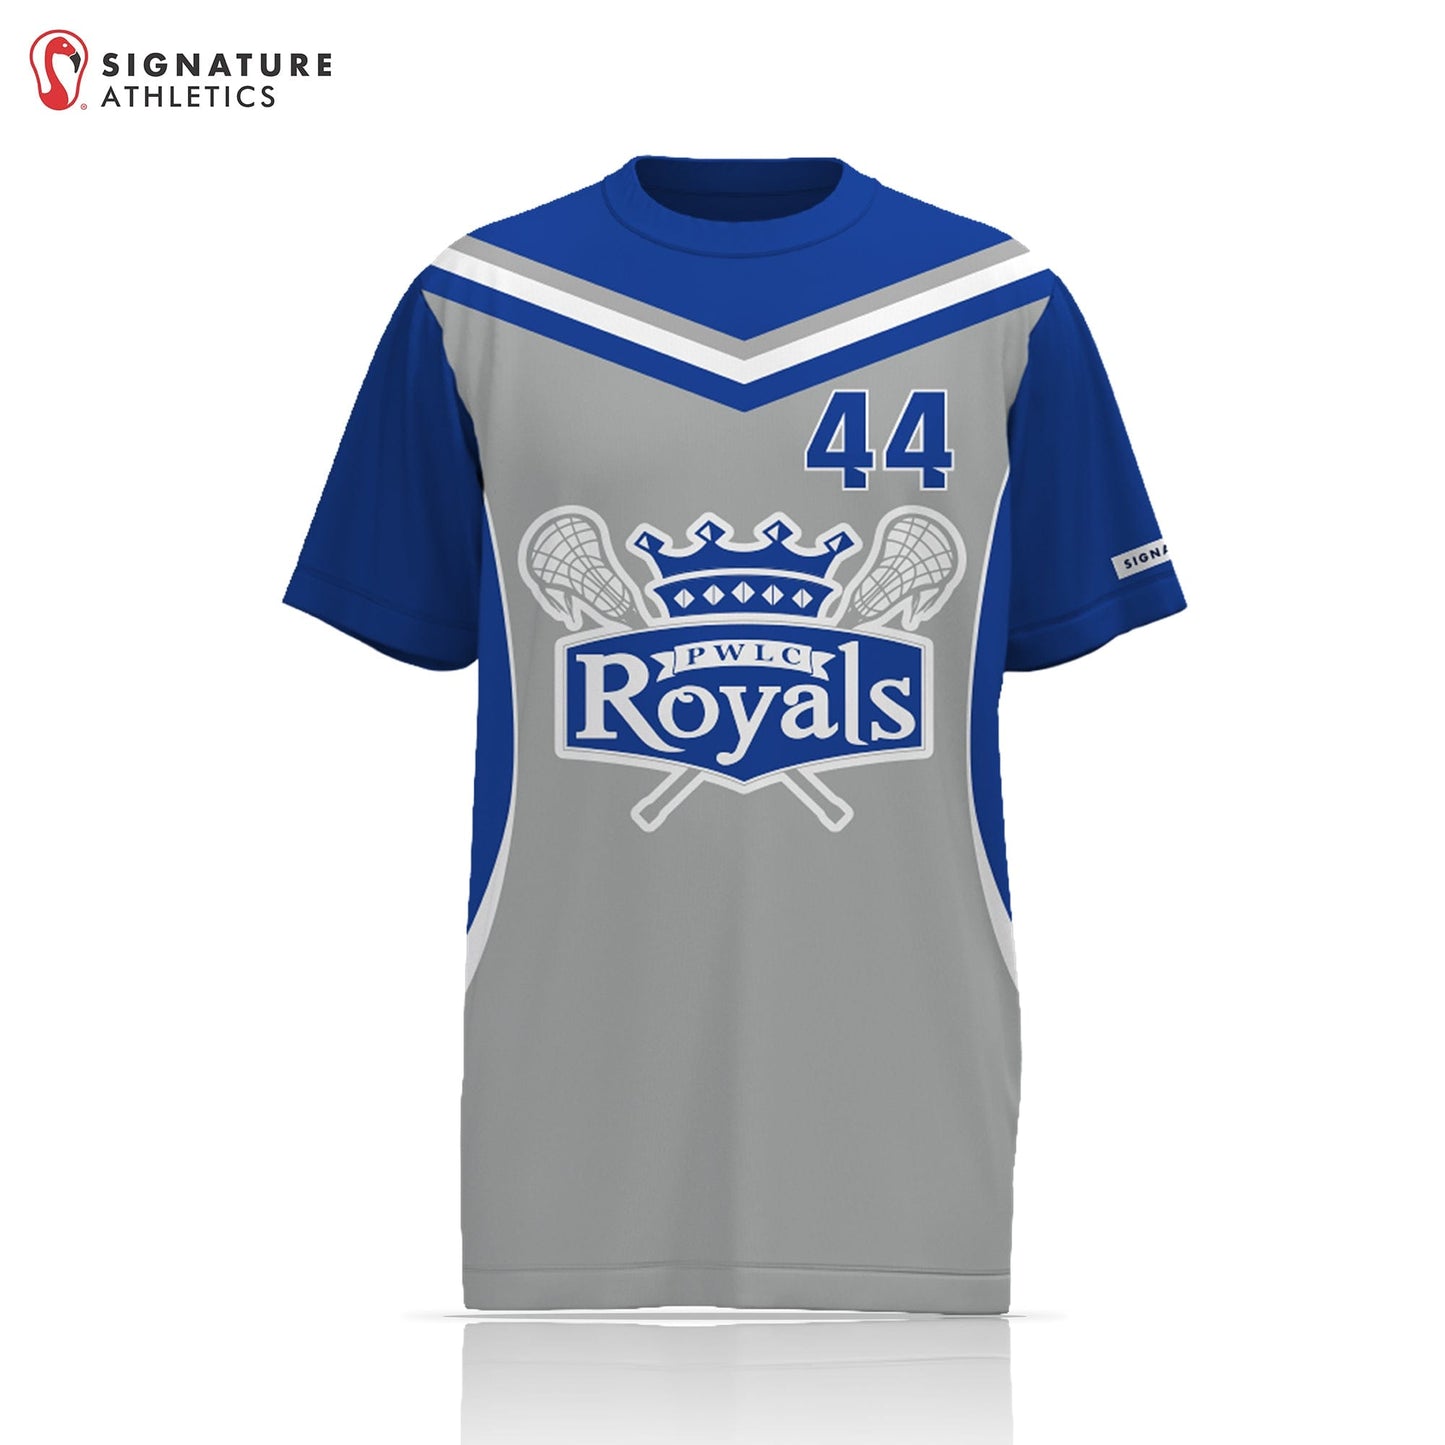 Prince William Lacrosse Club - Royals Unisex Performance Short Sleeve Shooting Shirt - Basic 2.0:Boys 2029 Signature Lacrosse